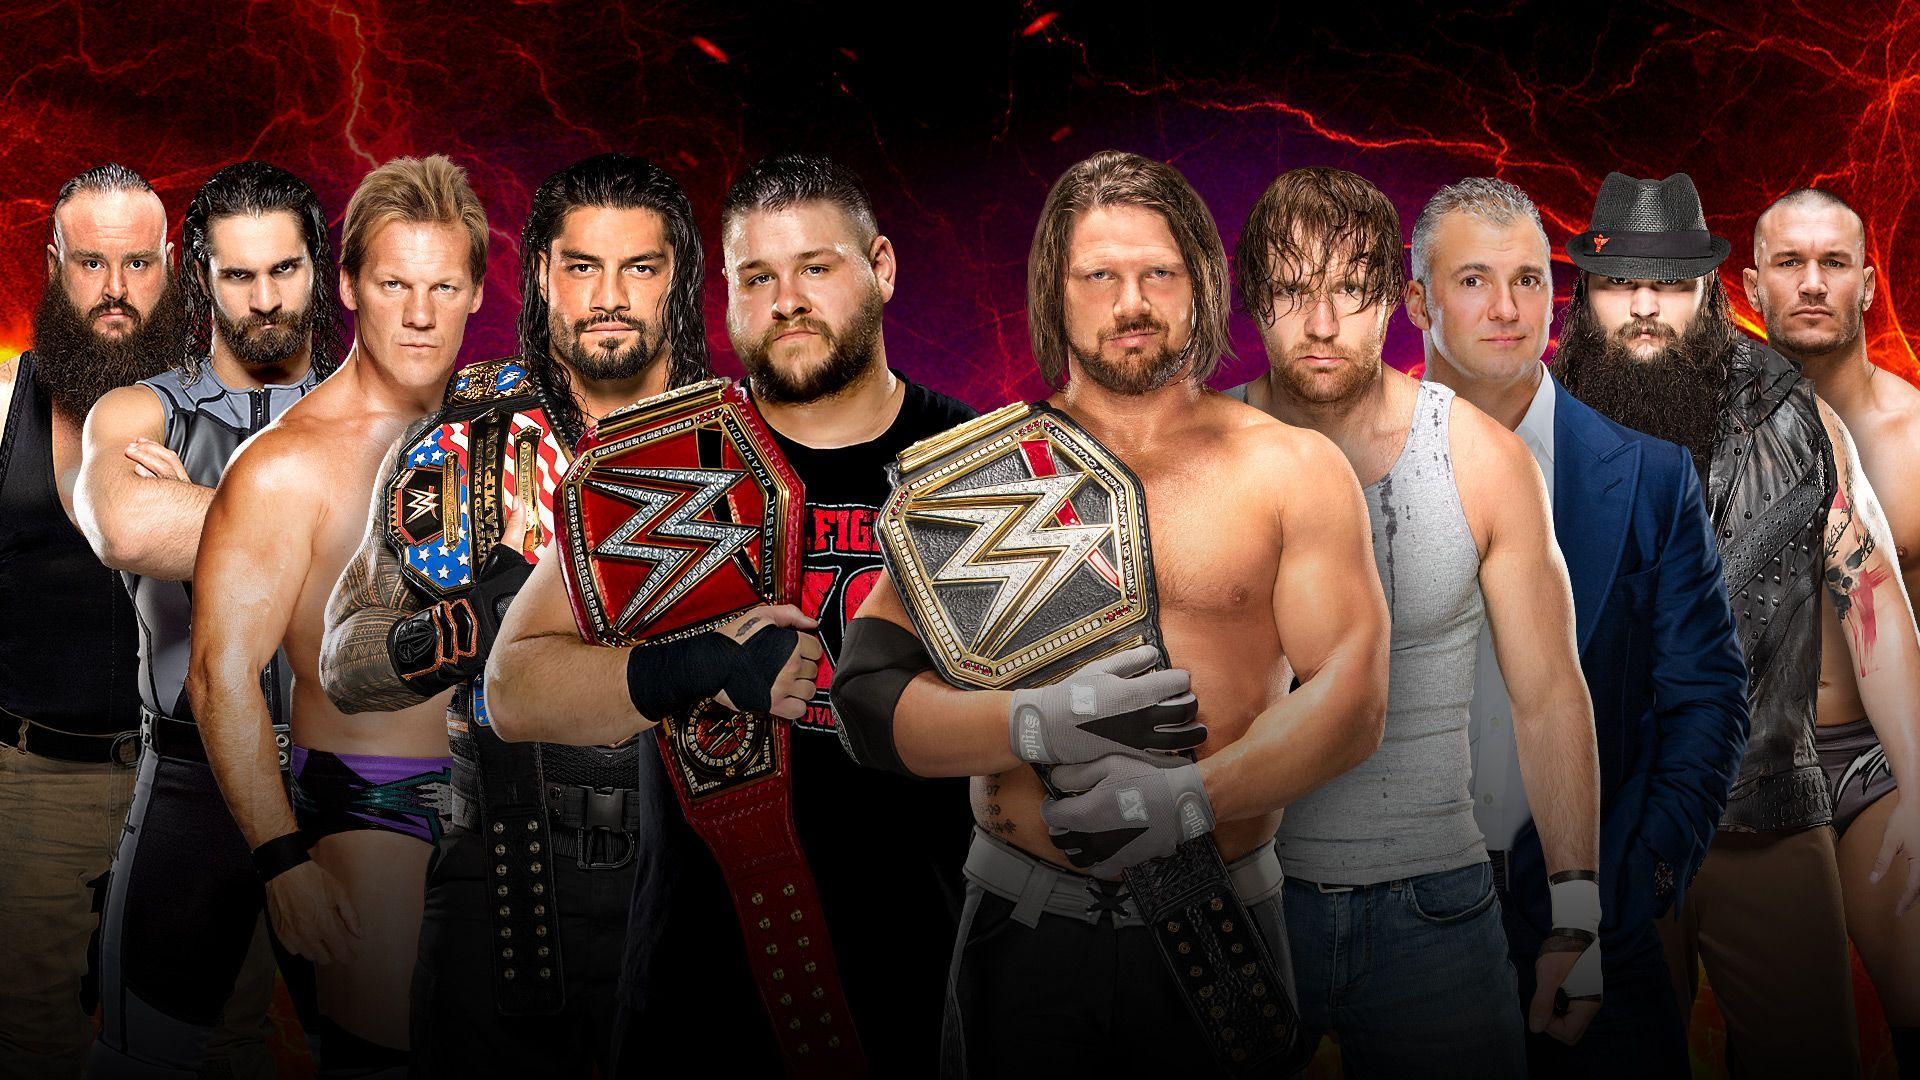 Team SmackDown Wins The Men's Match At WWE Survivor Series